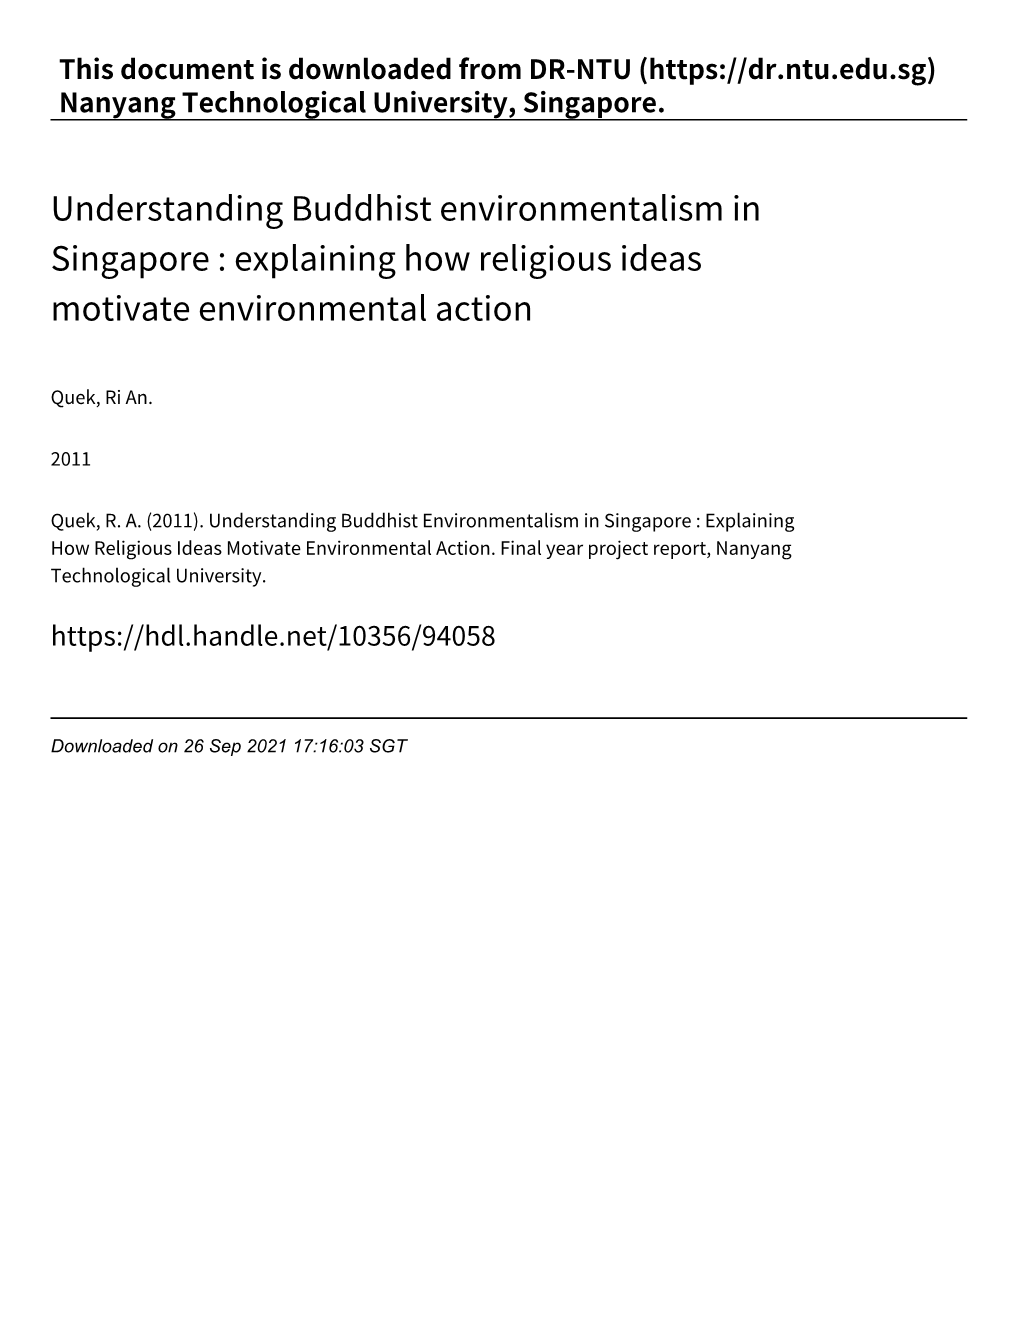 Understanding Buddhist Environmentalism in Singapore : Explaining How Religious Ideas Motivate Environmental Action